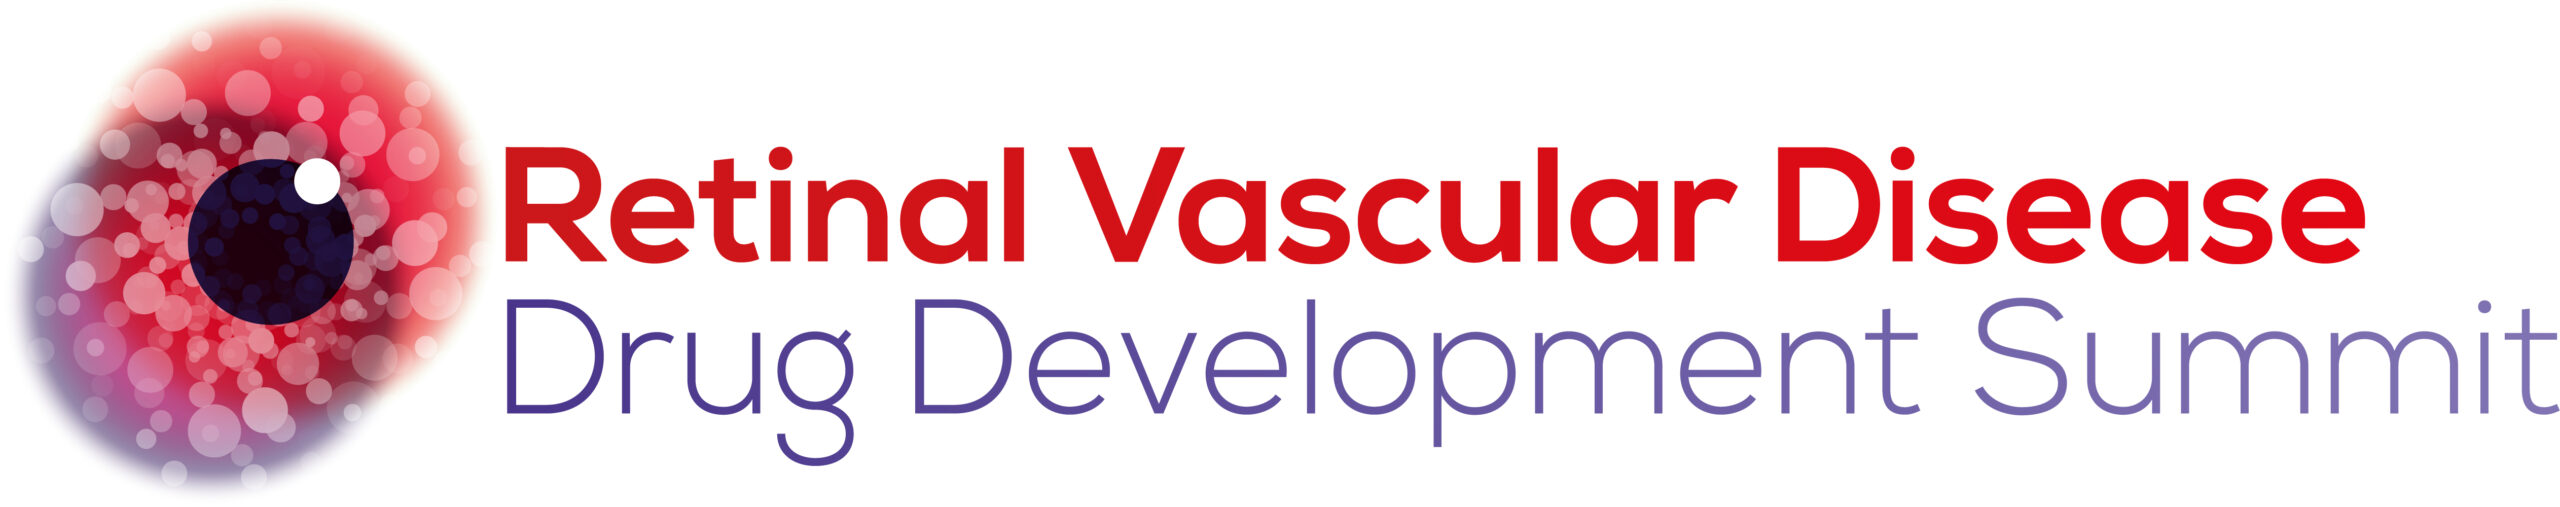 Retinal vascular Disease Drug Development Summit logo